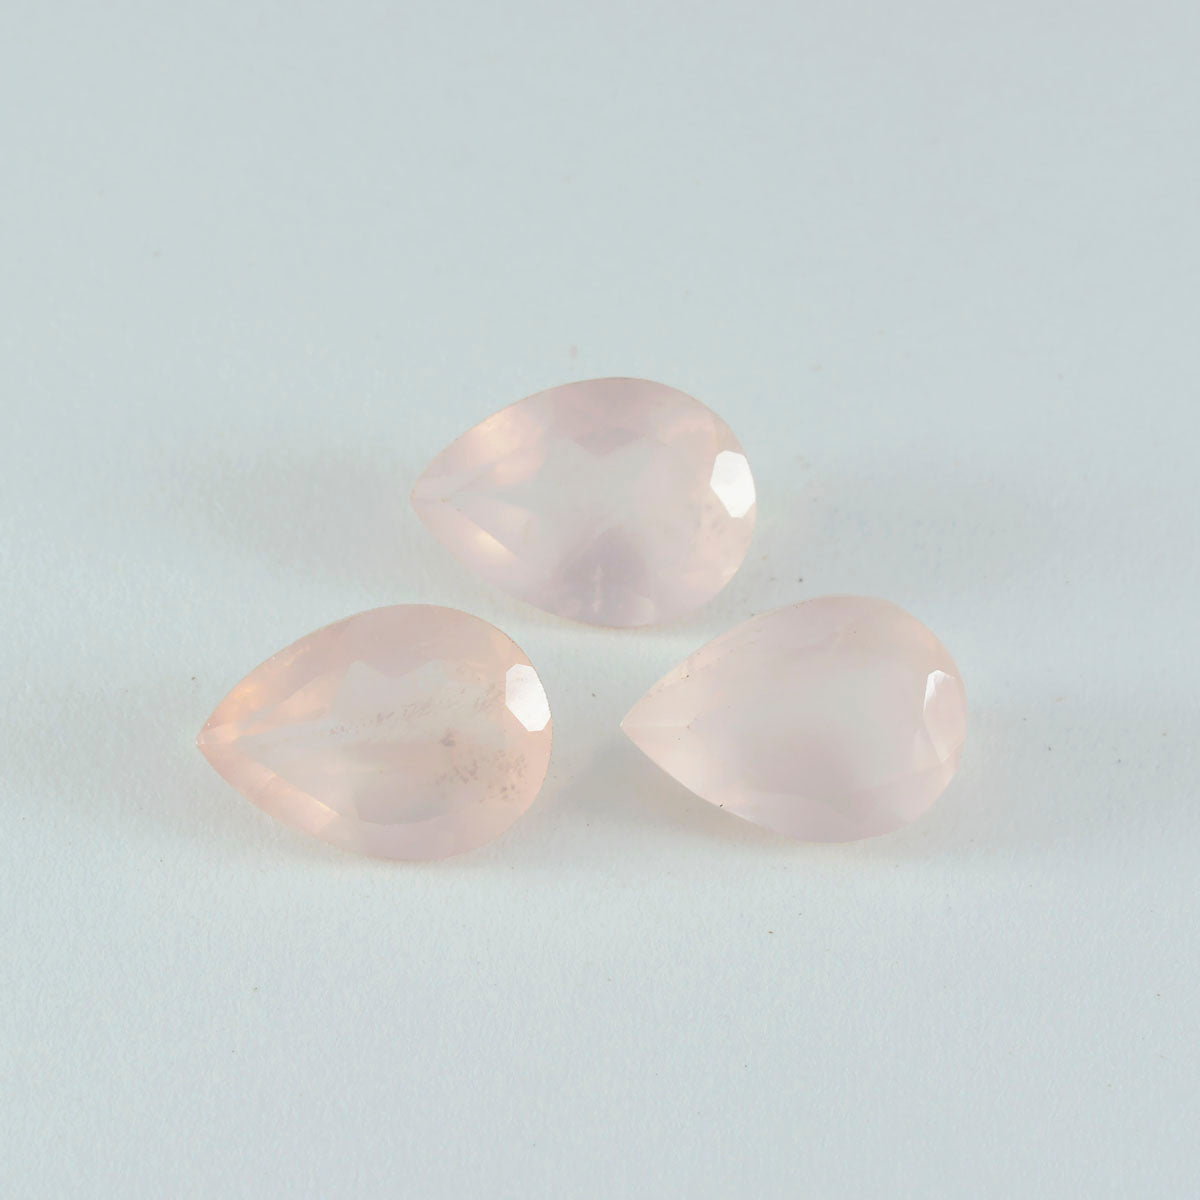 Riyogems 1PC Pink Rose Quartz Faceted 10x14 mm Pear Shape cute Quality Loose Stone